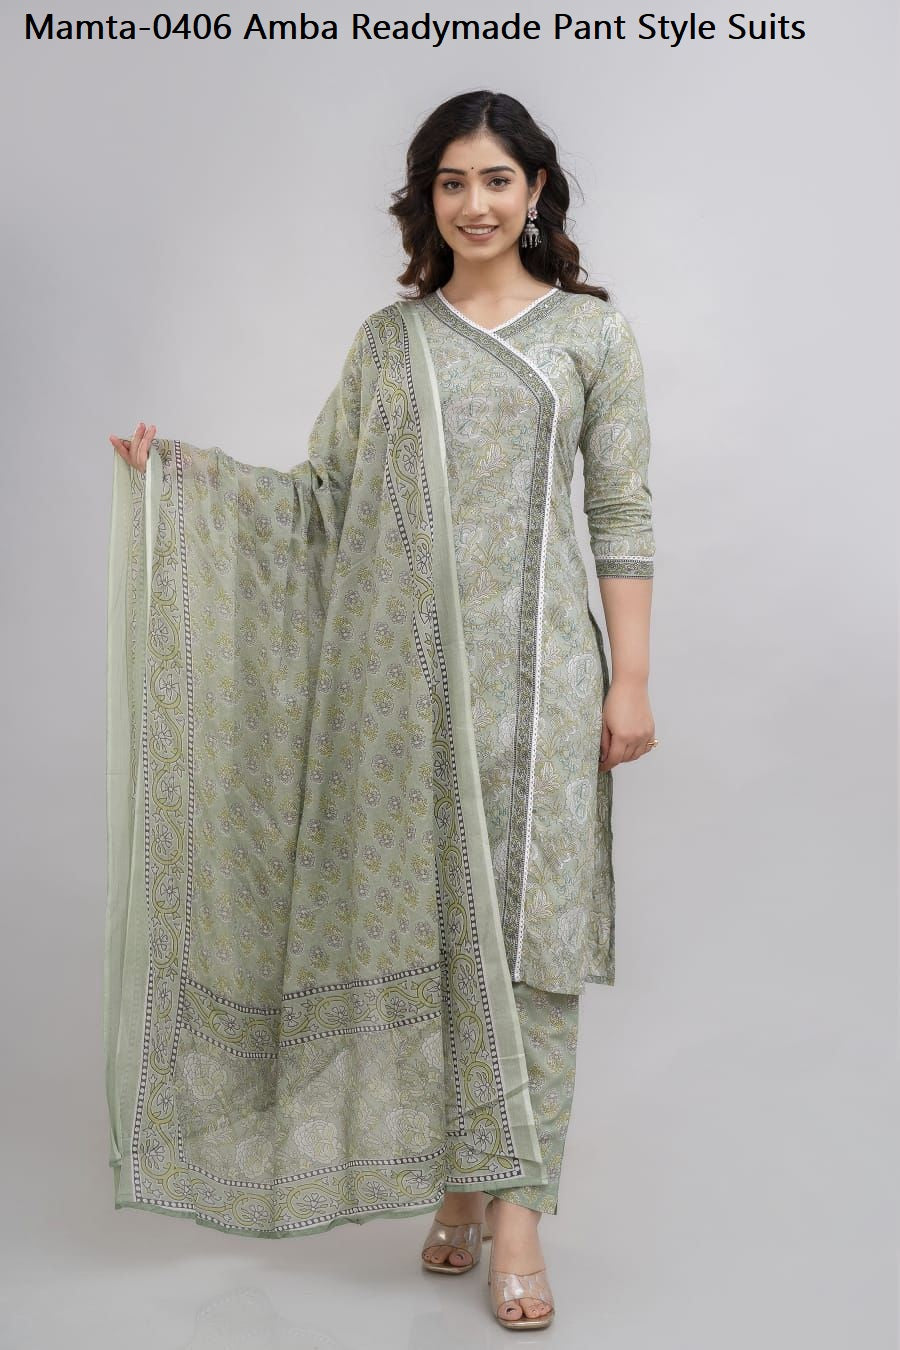 Mamta-0406 Amba Pure Cotton Readymade Pant Style Suits Wholesaler India